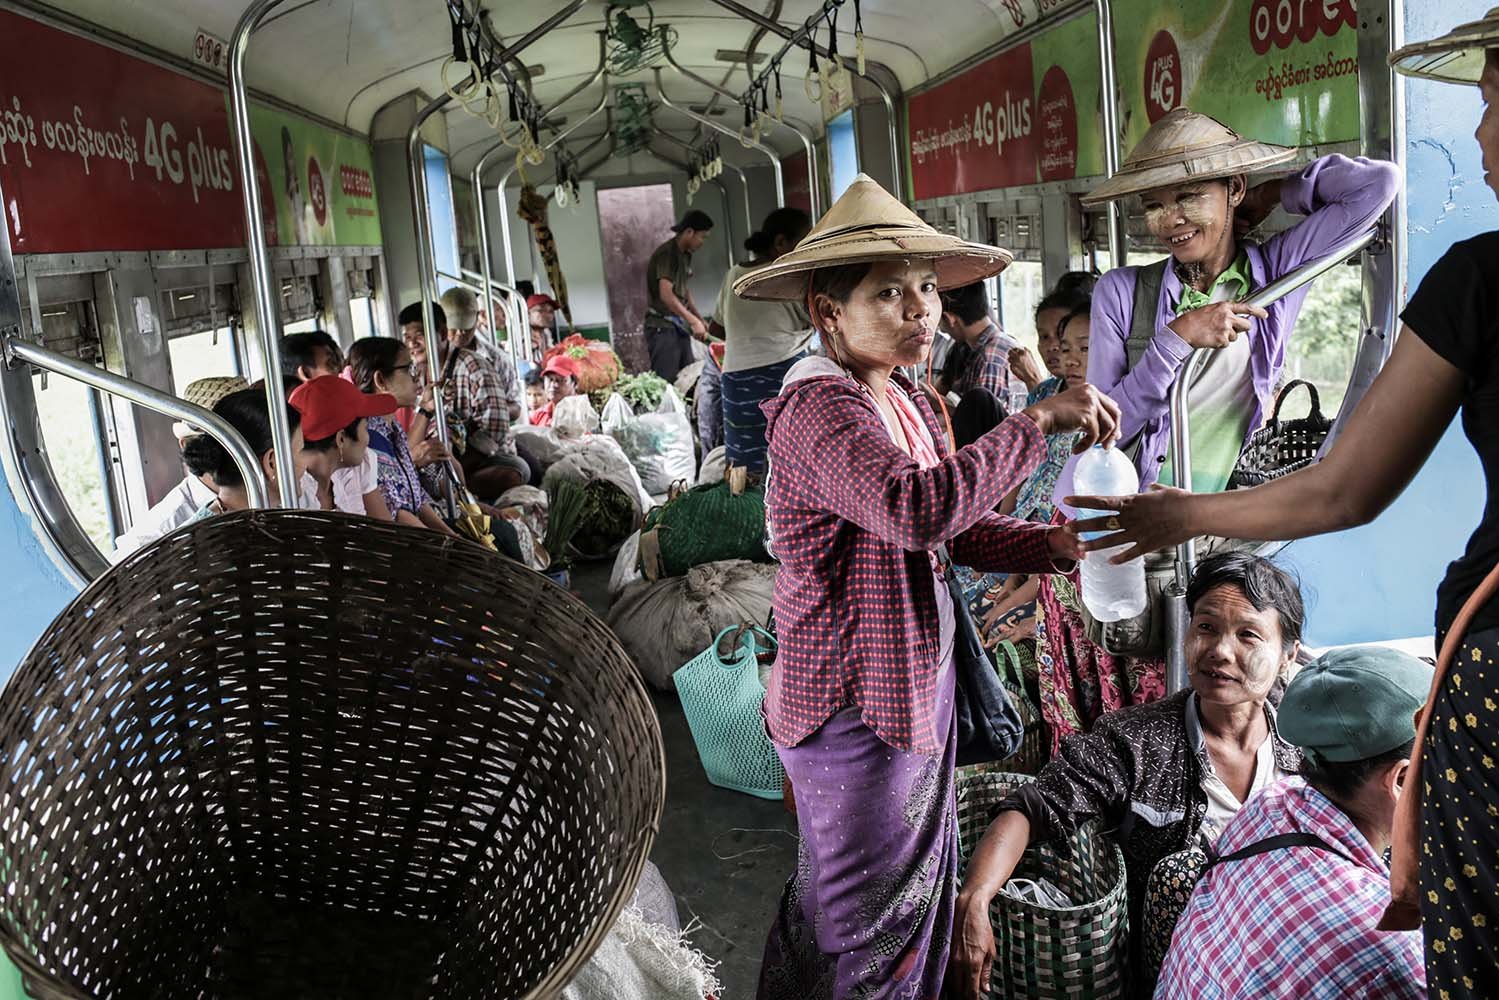 Masyarakat banyak mengadalkan transportasi umum, seperti kereta untuk mengangkut hasil bumi. Circular train atau kereta melingkar menjadi moda transportasi wisata yang banyak dimanfaatkan oleh wisatawan asing untuk melihat dan merasakan keseharian masyarakat Myanmar. 